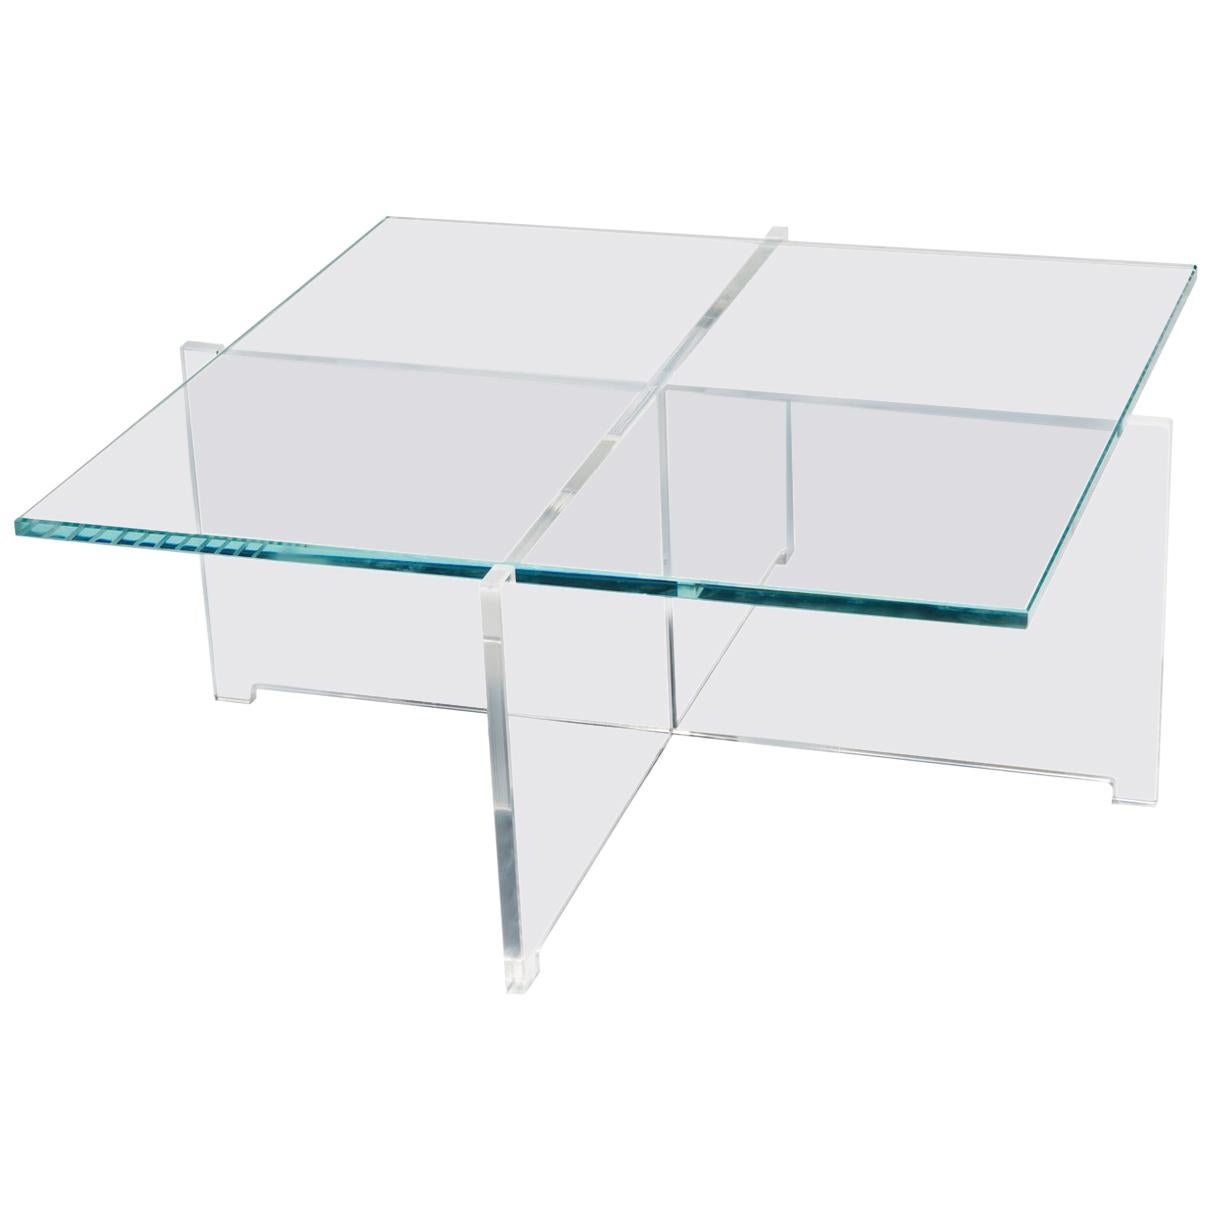 Bodil Kjær 'Crossplex Low Table', Polycarbonate by Karakter For Sale